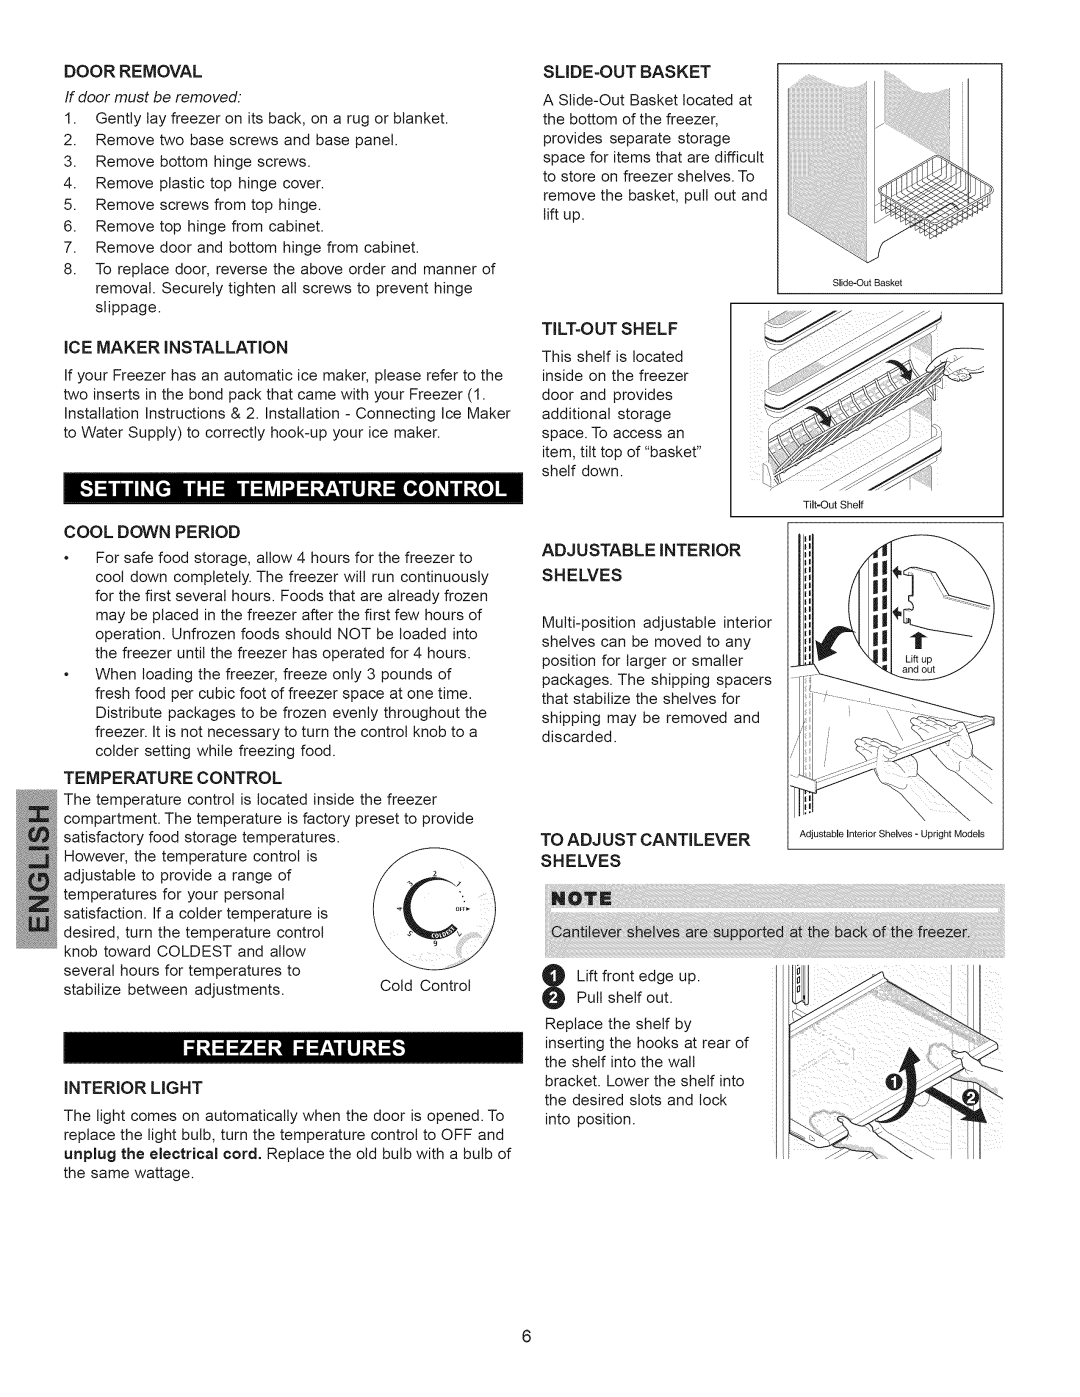 Kenmore 297310600 manual If door must be removed, Ice Maker Installation, Door Removal, Slide-Out Basket, Tilt-Out Shelf 